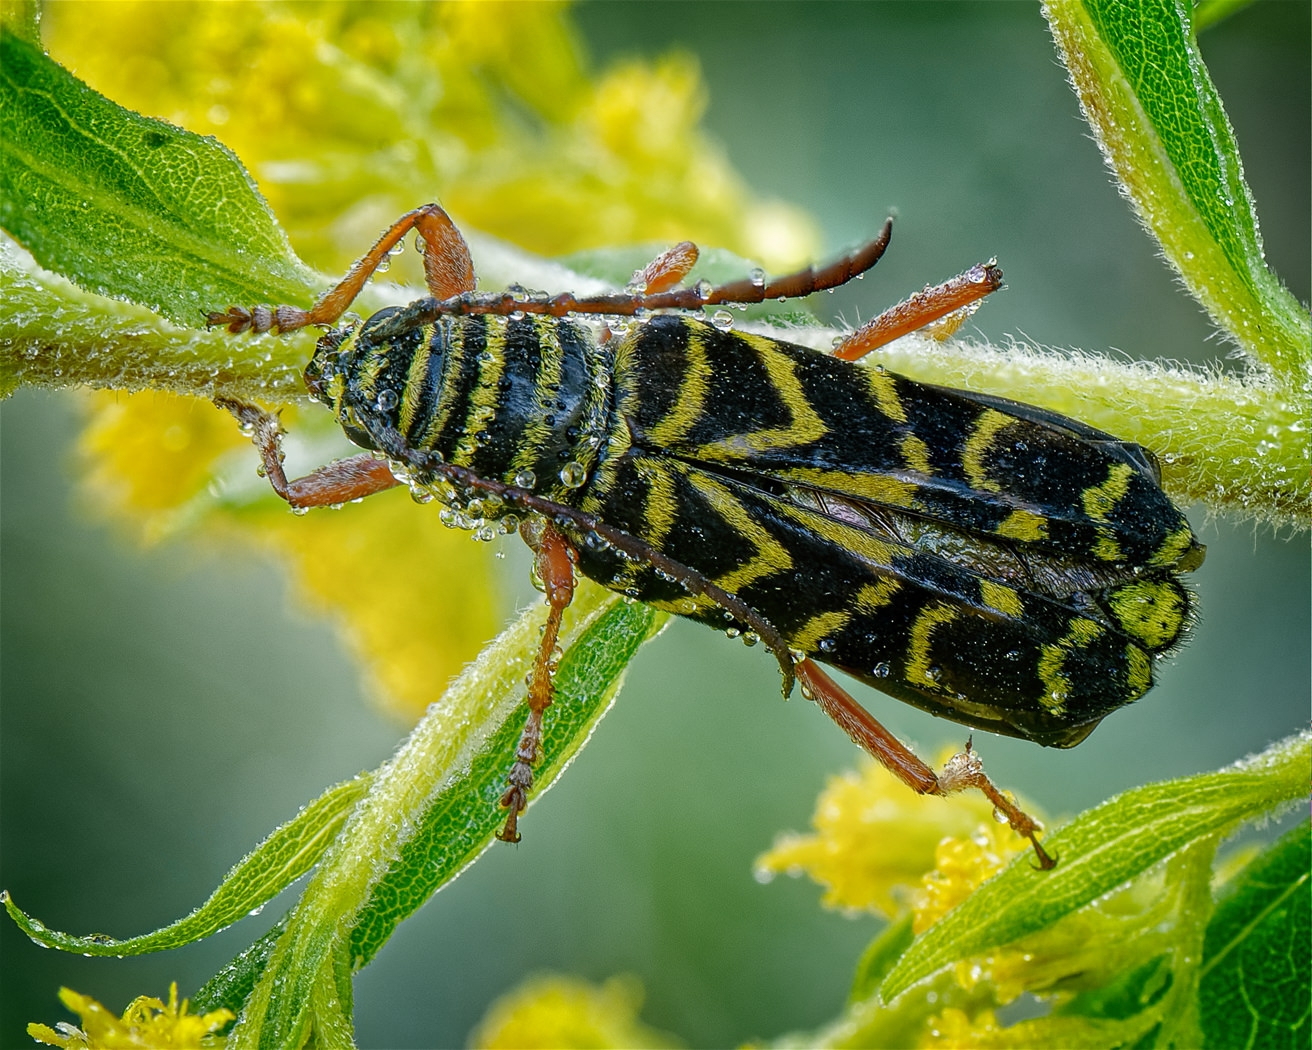 Locust Borer Beetle by John McGarry